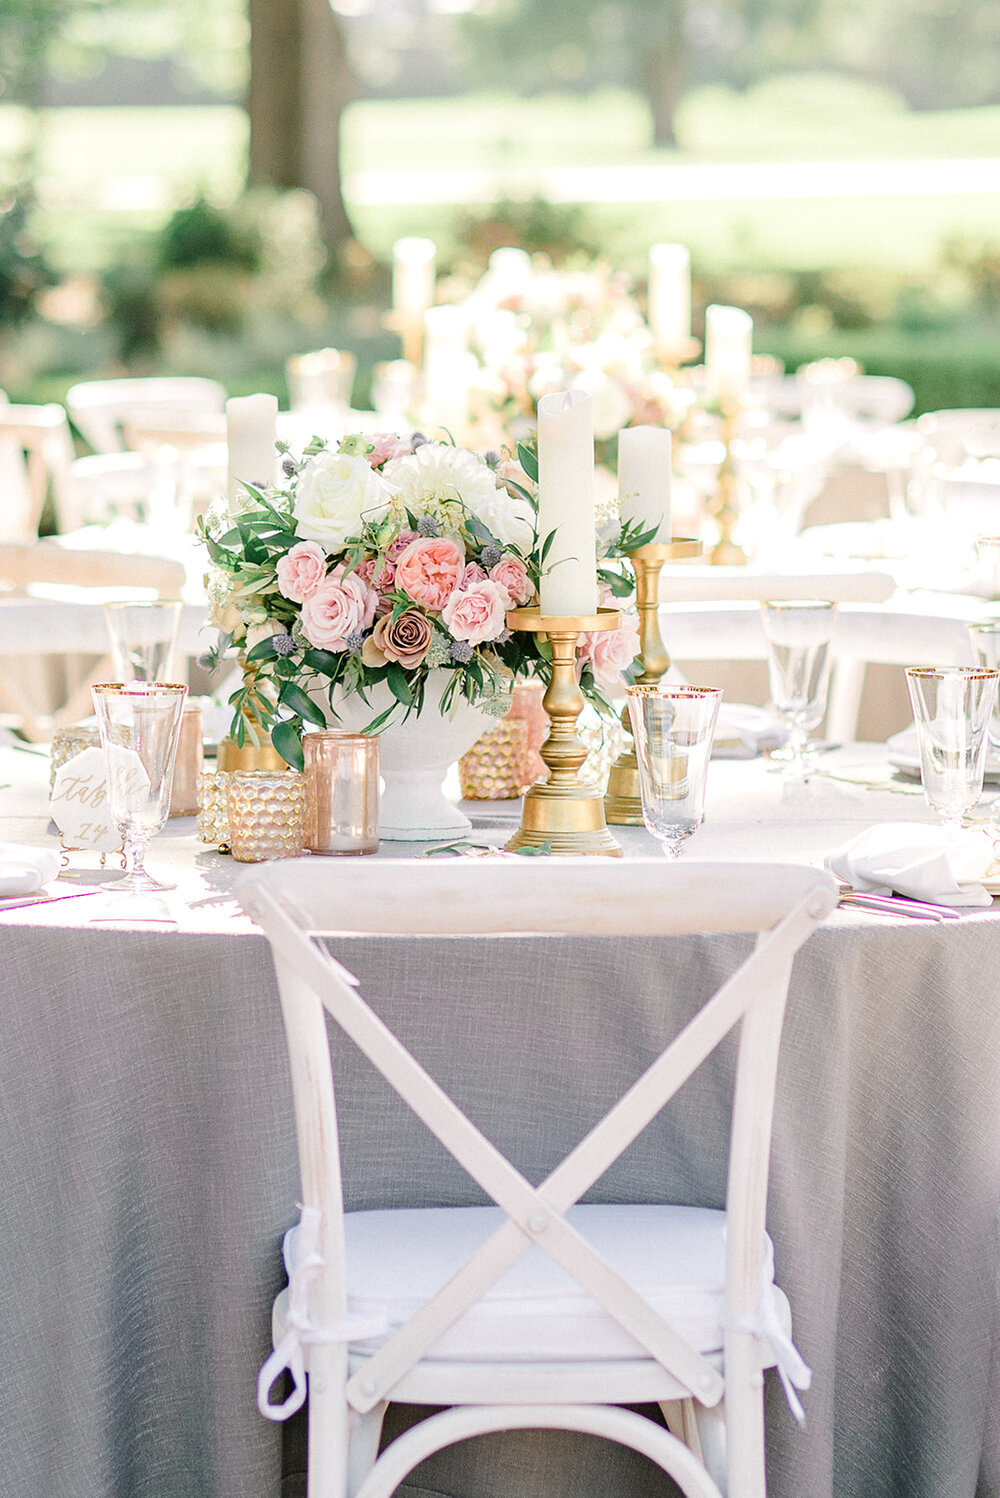 Violette-fleurs-roseville-napa-california-luxury-florist-silverado-resort-and-spa- weddings-by-scott-and-dana-reception-centerpiece-gold-candleholders-blush-mauve-flowers.jpg